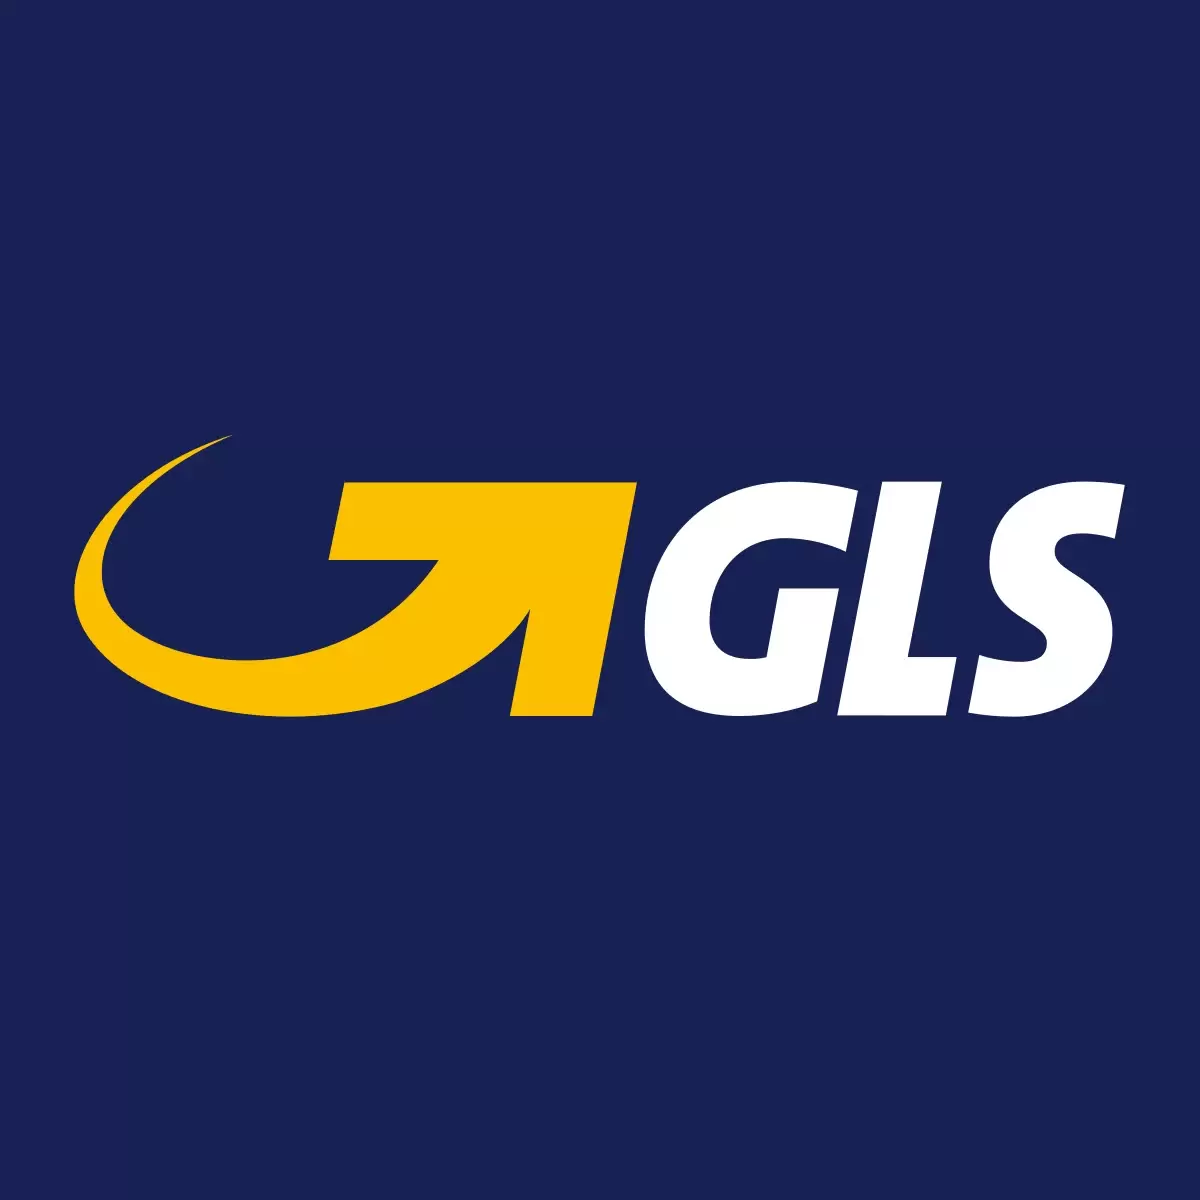 Logo gls